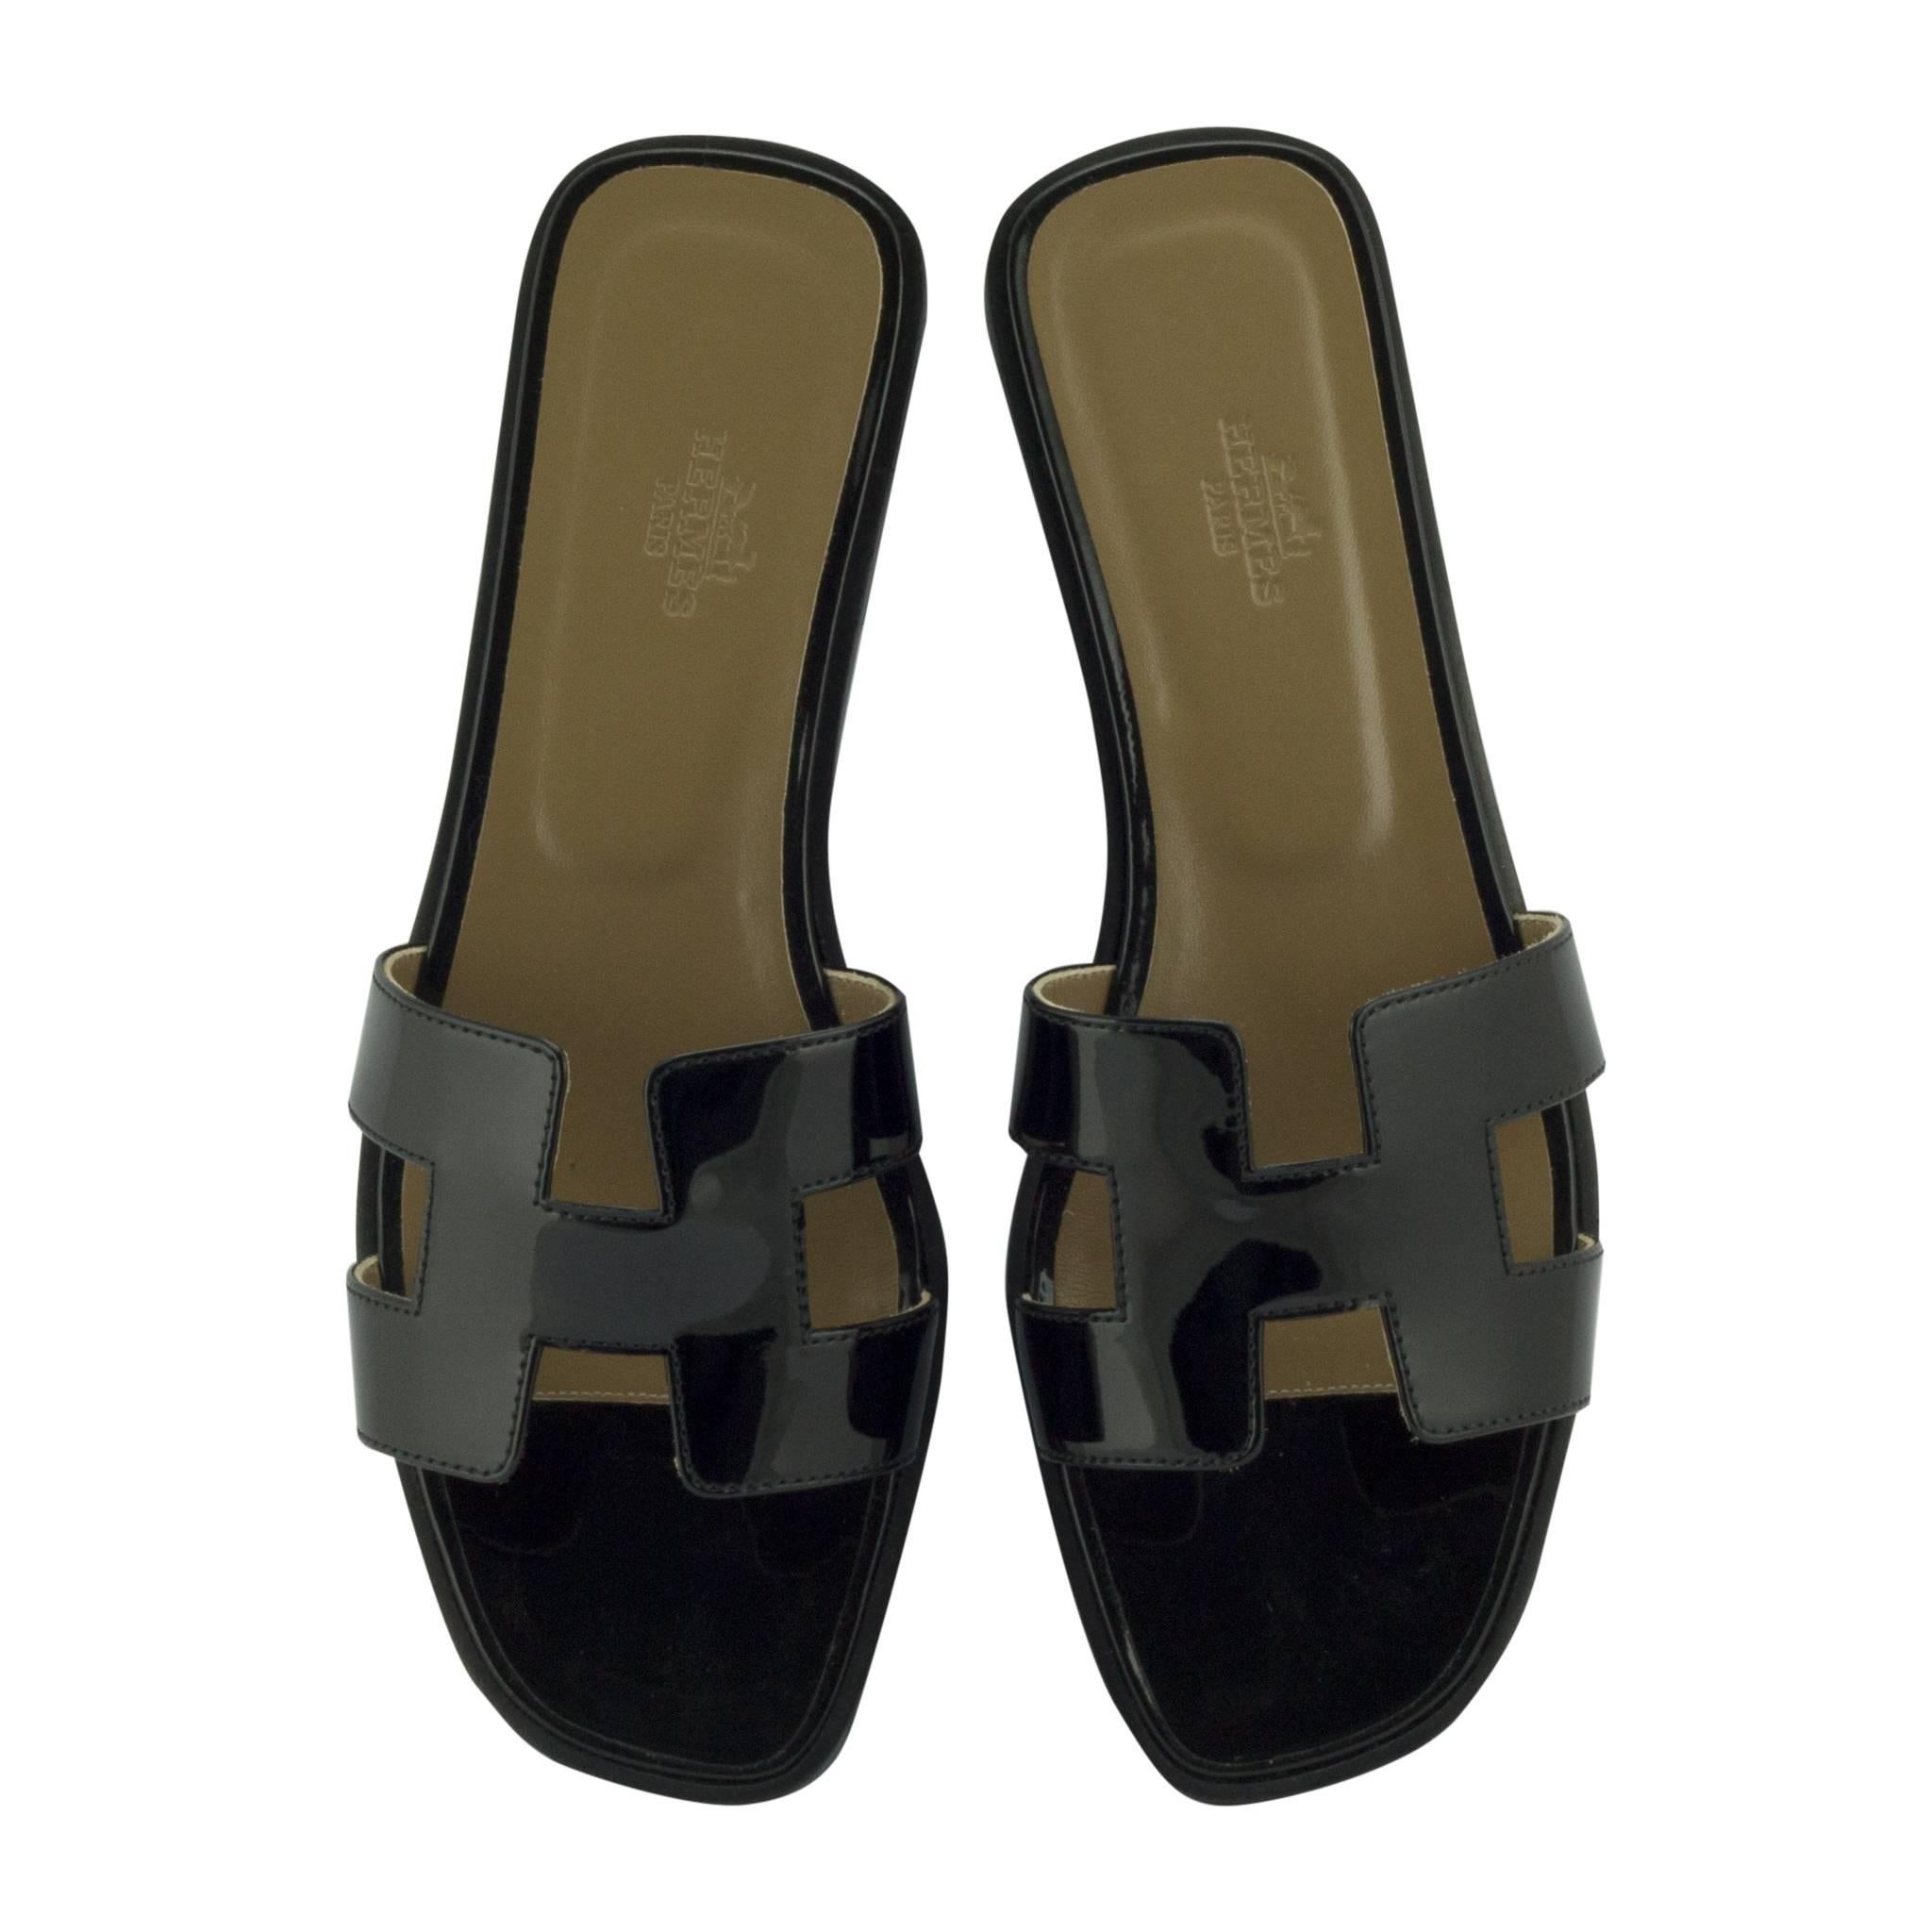 Hermes Woman Sandales "Oran" Patent Leather Black Color 8 Size For Sale